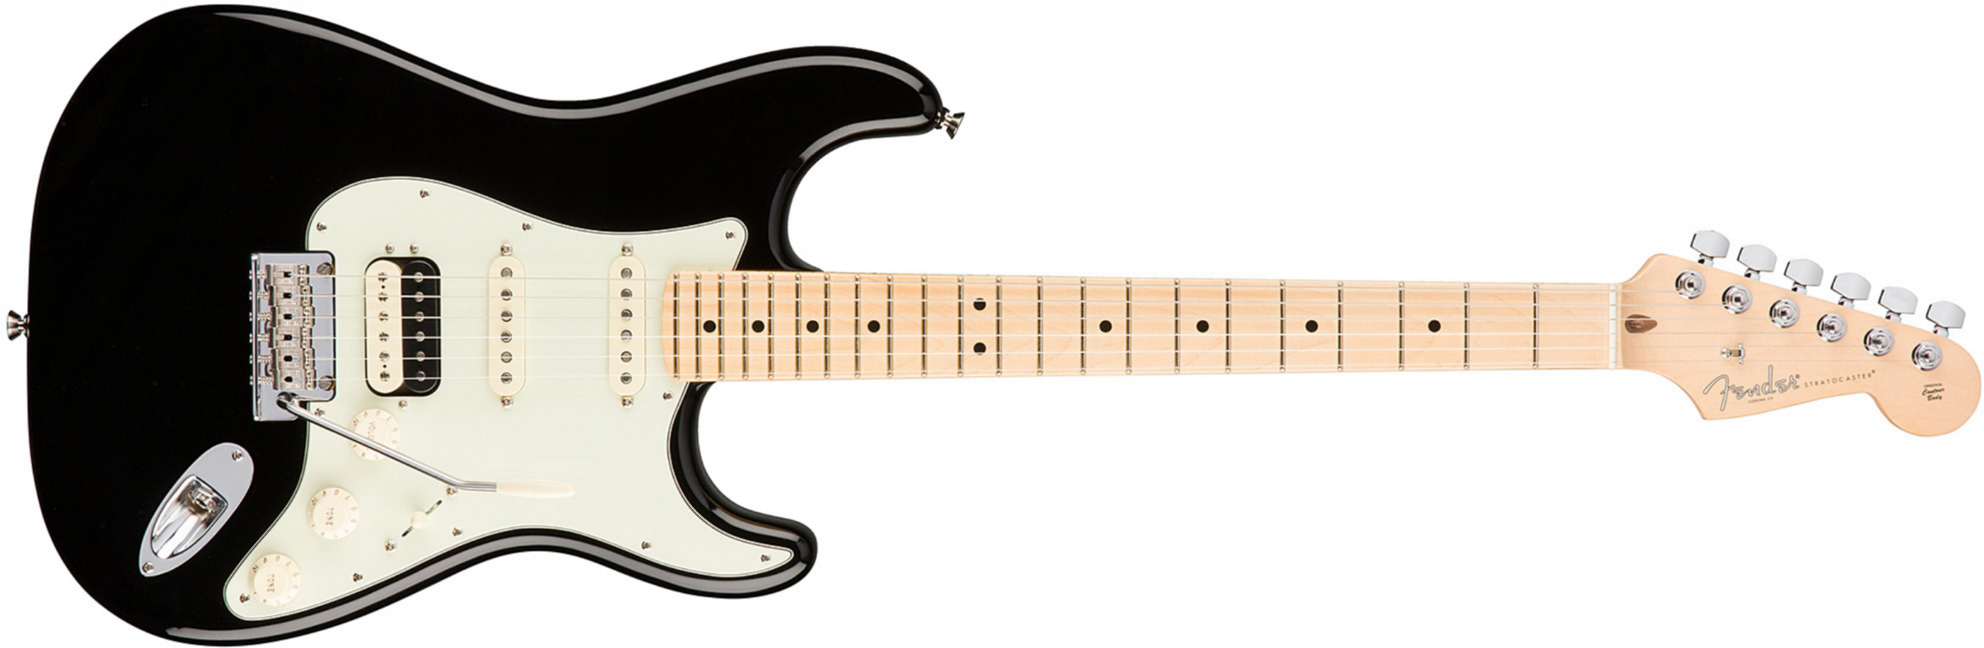 Fender Strat Hss Shawbucker American Professional Usa Mn - Black - Guitare Électrique Forme Str - Main picture